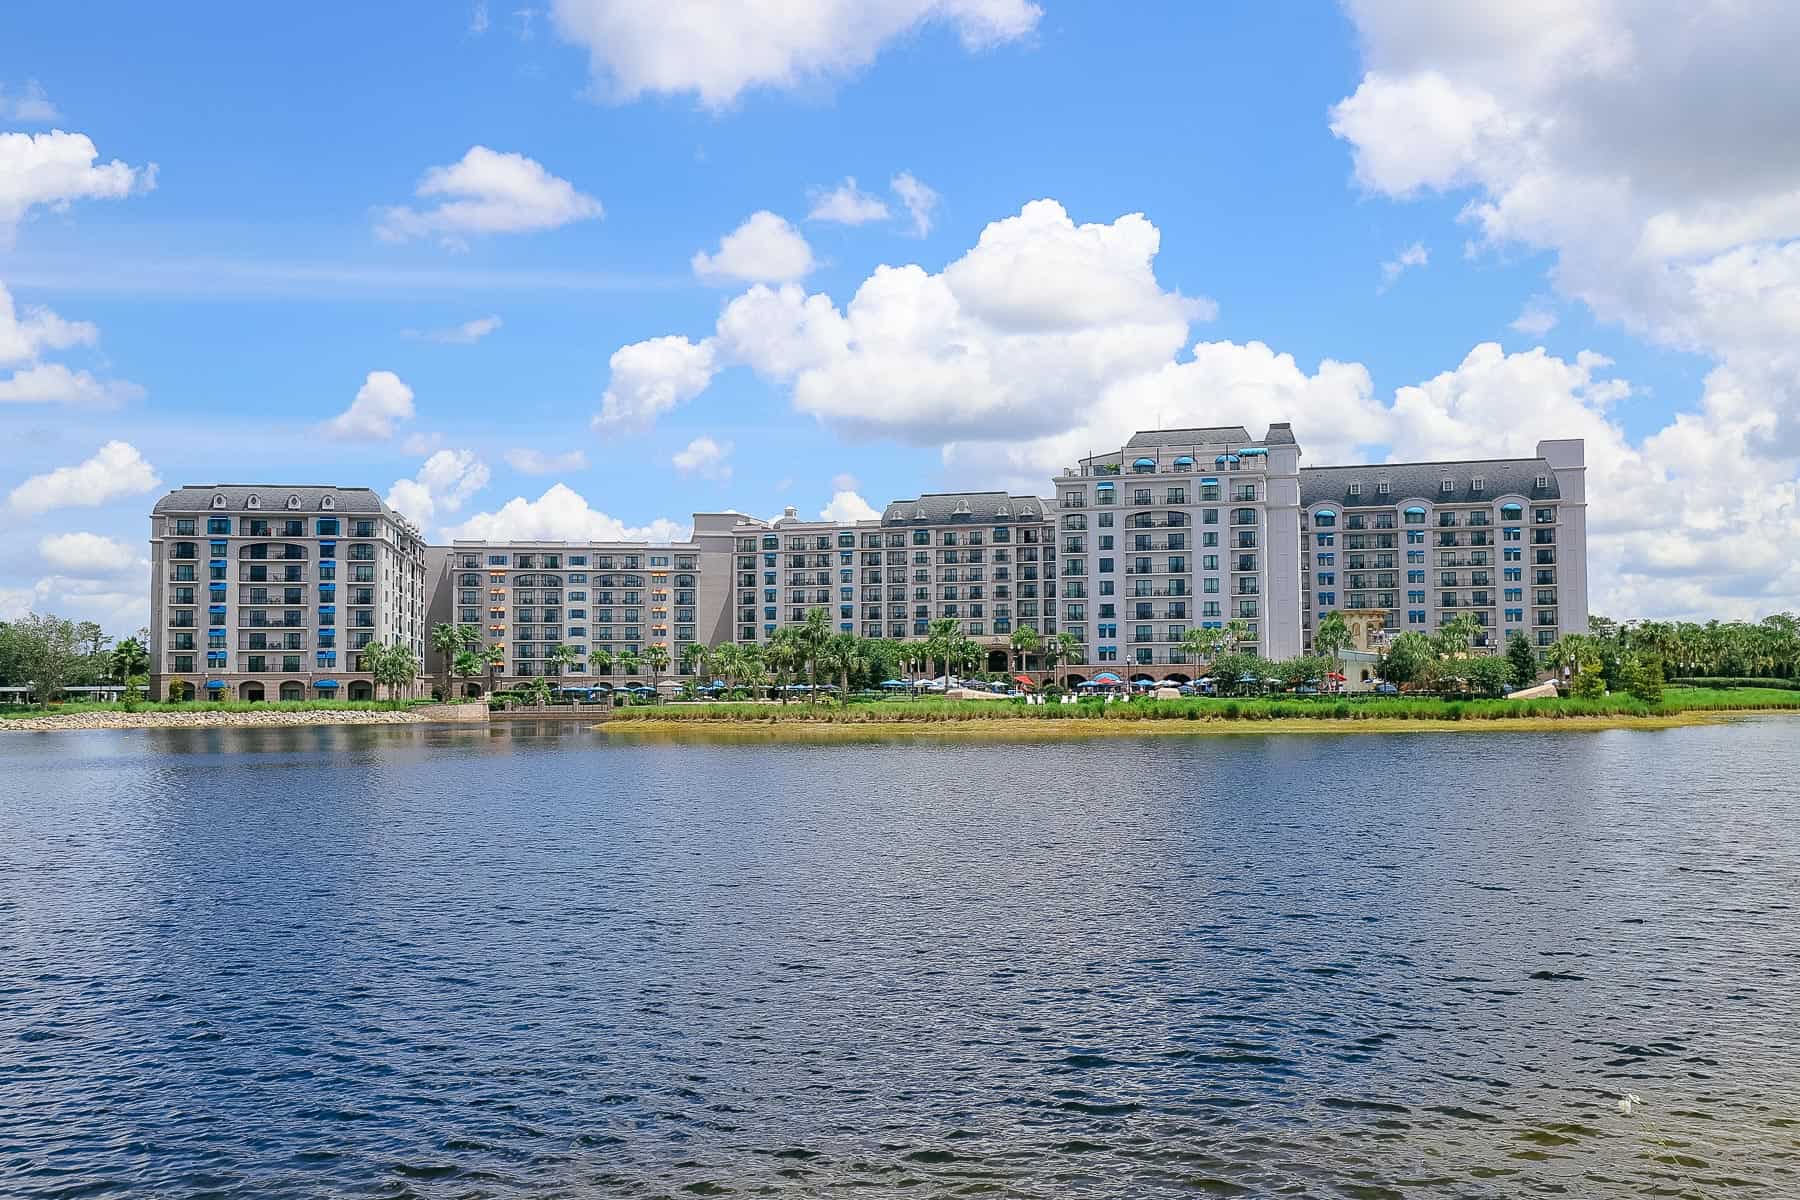 Disney's Riviera Resort sits behind the lake 